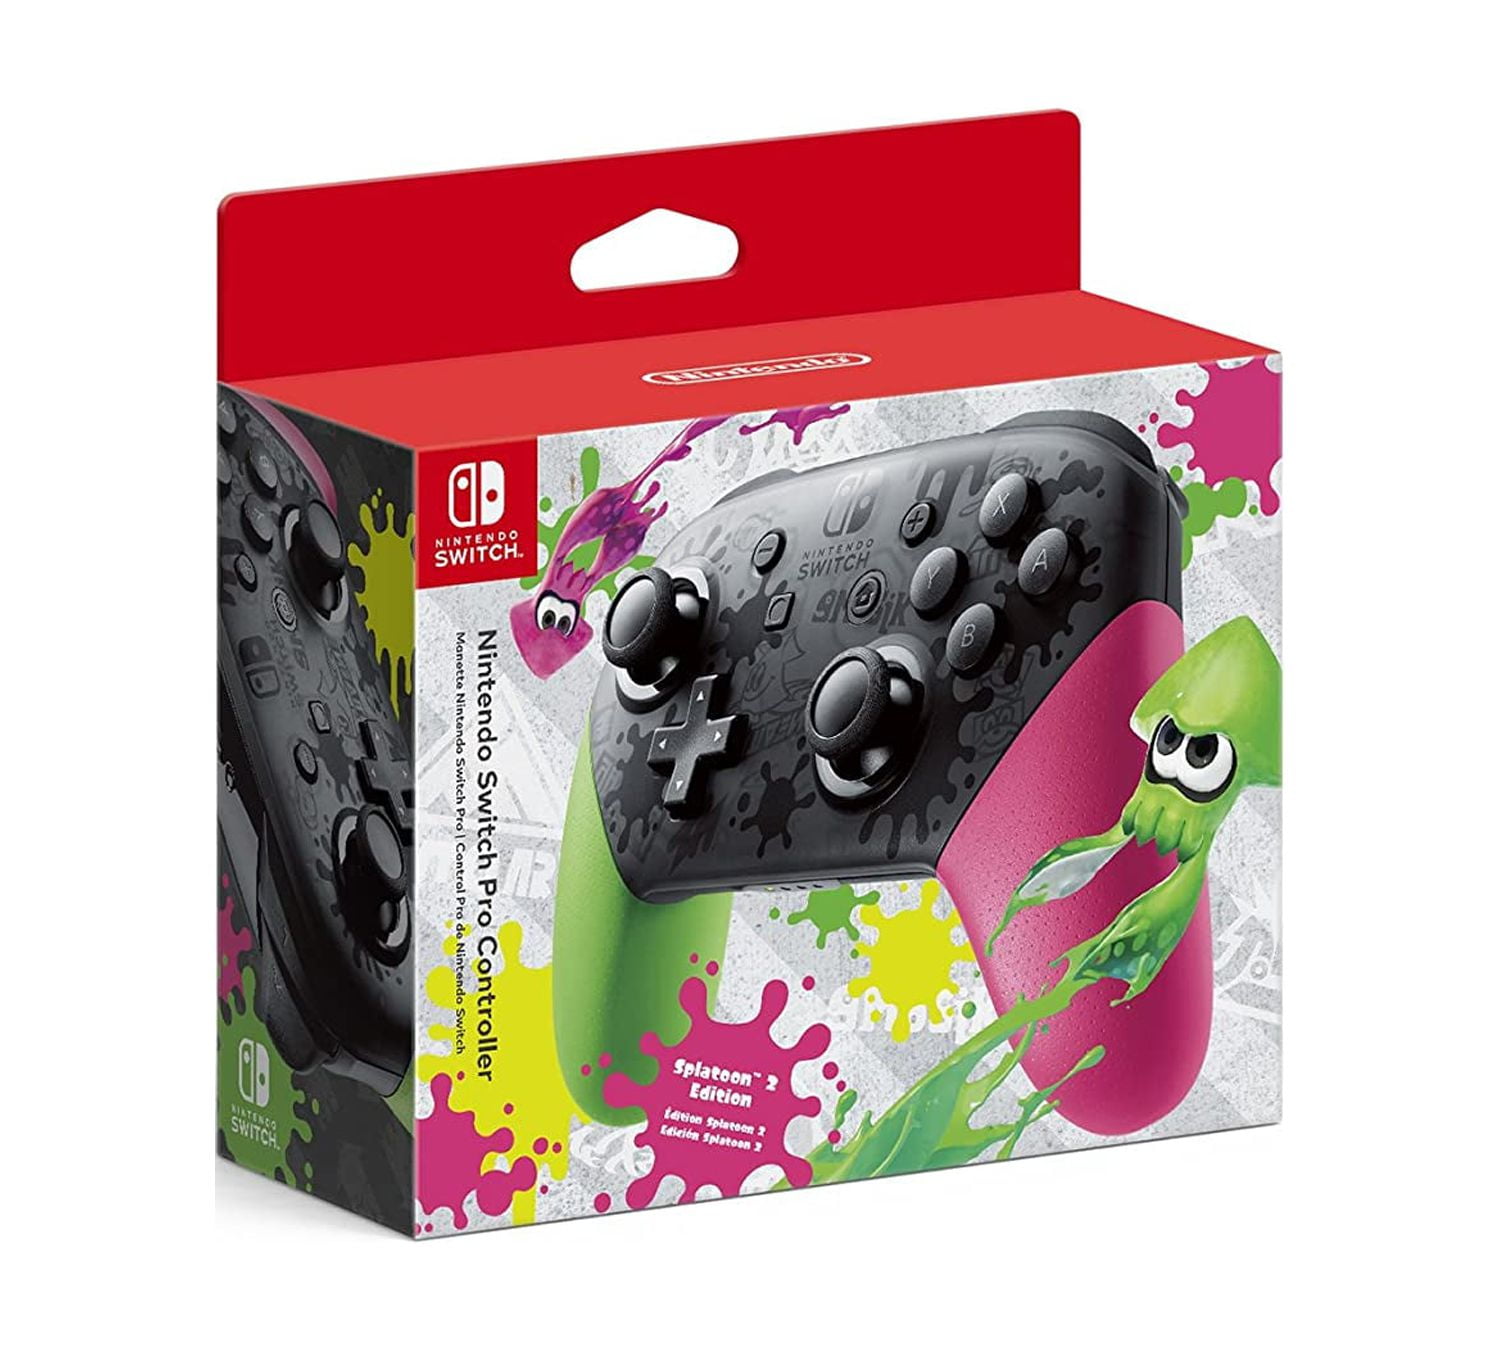 Nintendo Switch Pro Controller - Splatoon 2 Edition [Discontinued